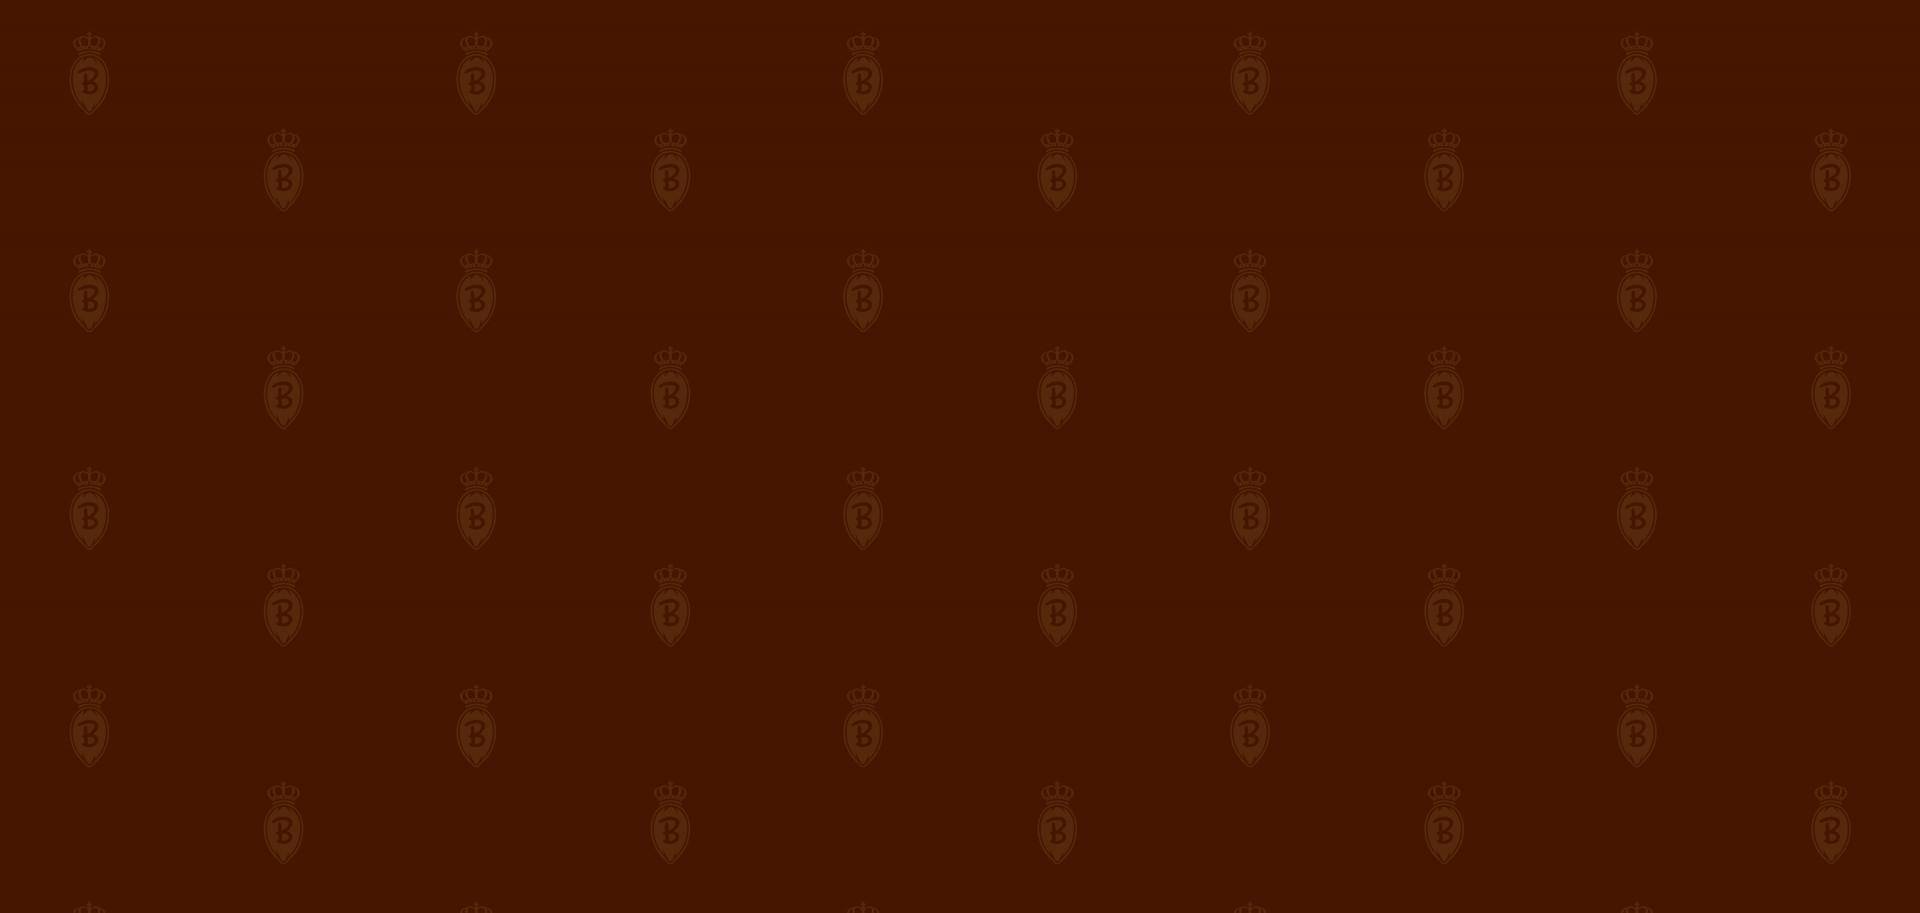 Bensdorp cocoa pattern